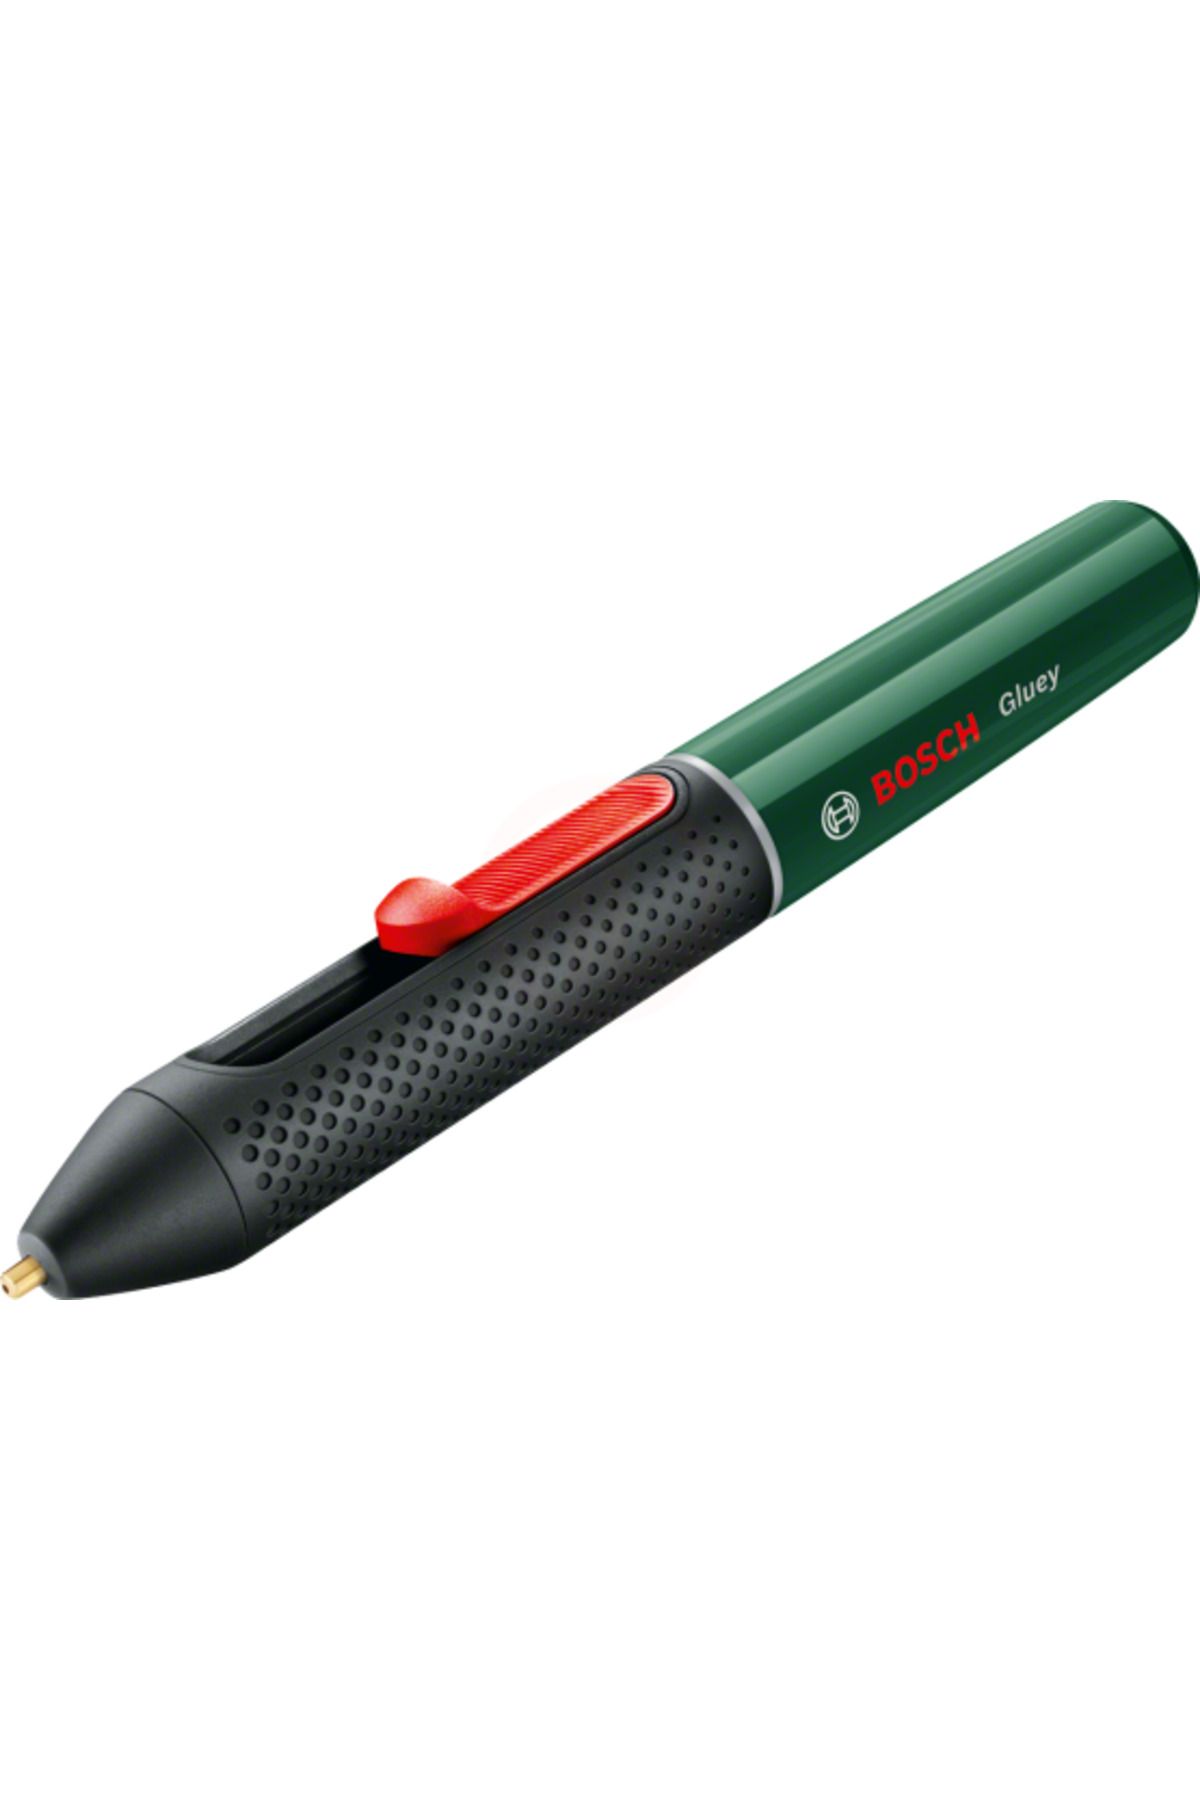 Bosch Akülü Gluey Tutkal Kalemi Yeşil (2 X 1,2V HR06 AA ŞARJ EDİLEBİLİR PİL) - 06032a2100